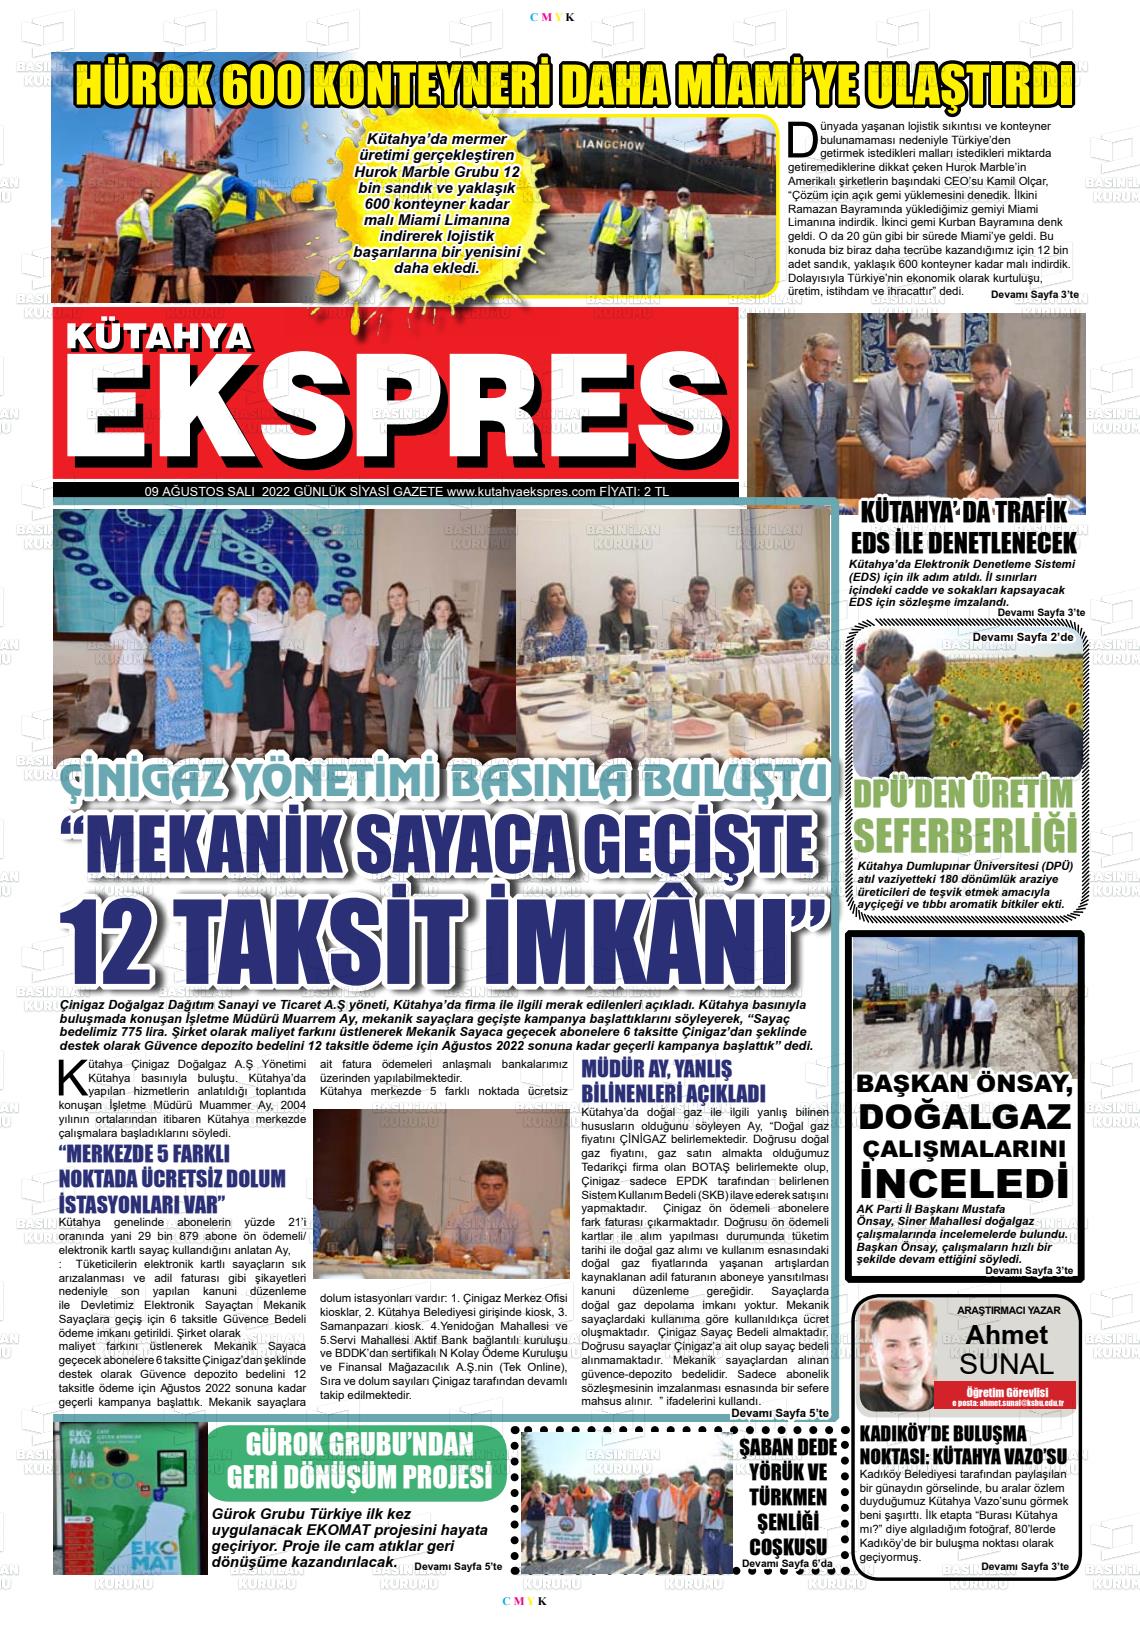 09 Ağustos 2022 Kütahya Ekspres Gazete Manşeti